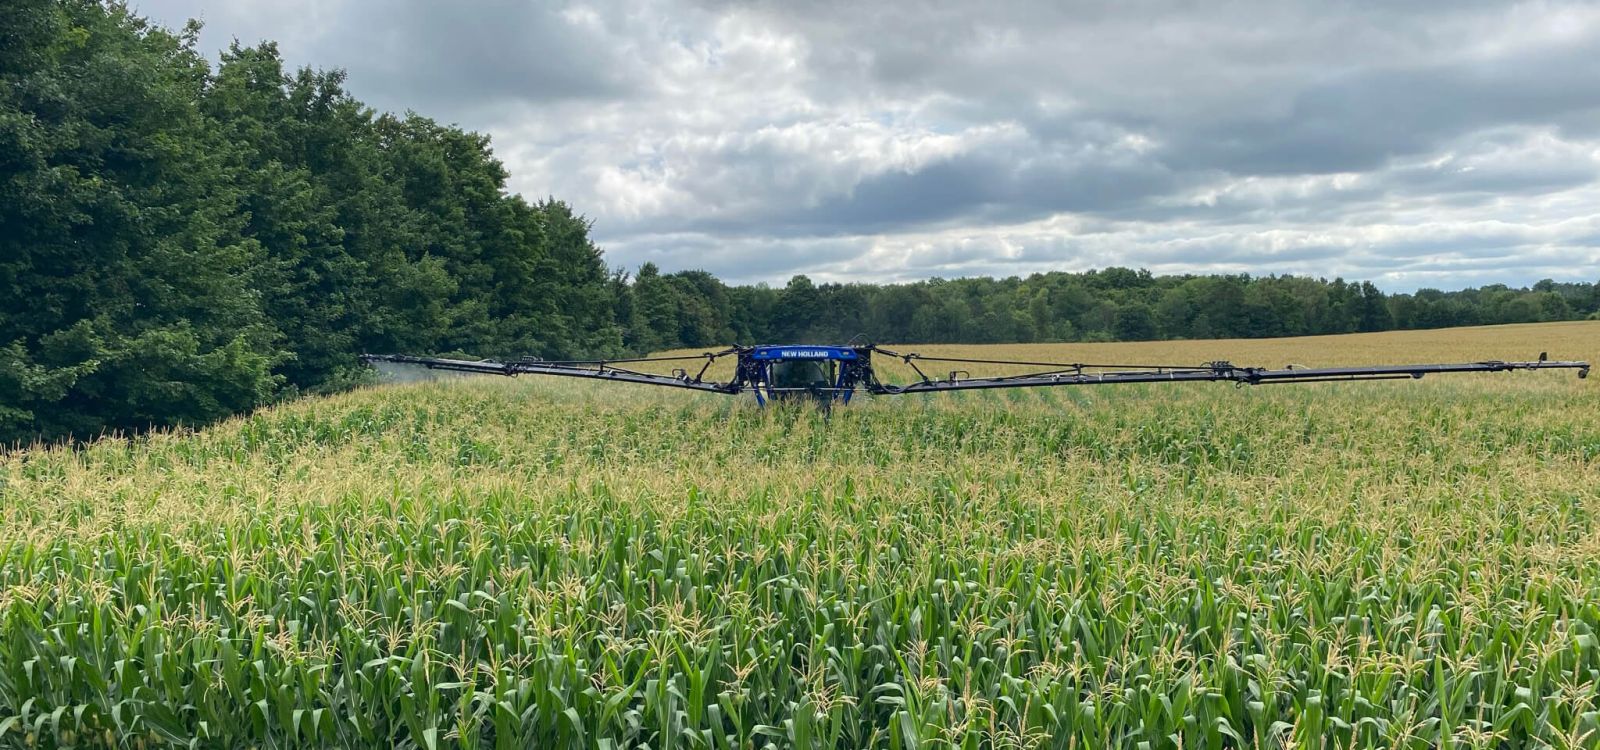 Alliance Agri-Turf harvesting corn with machinery